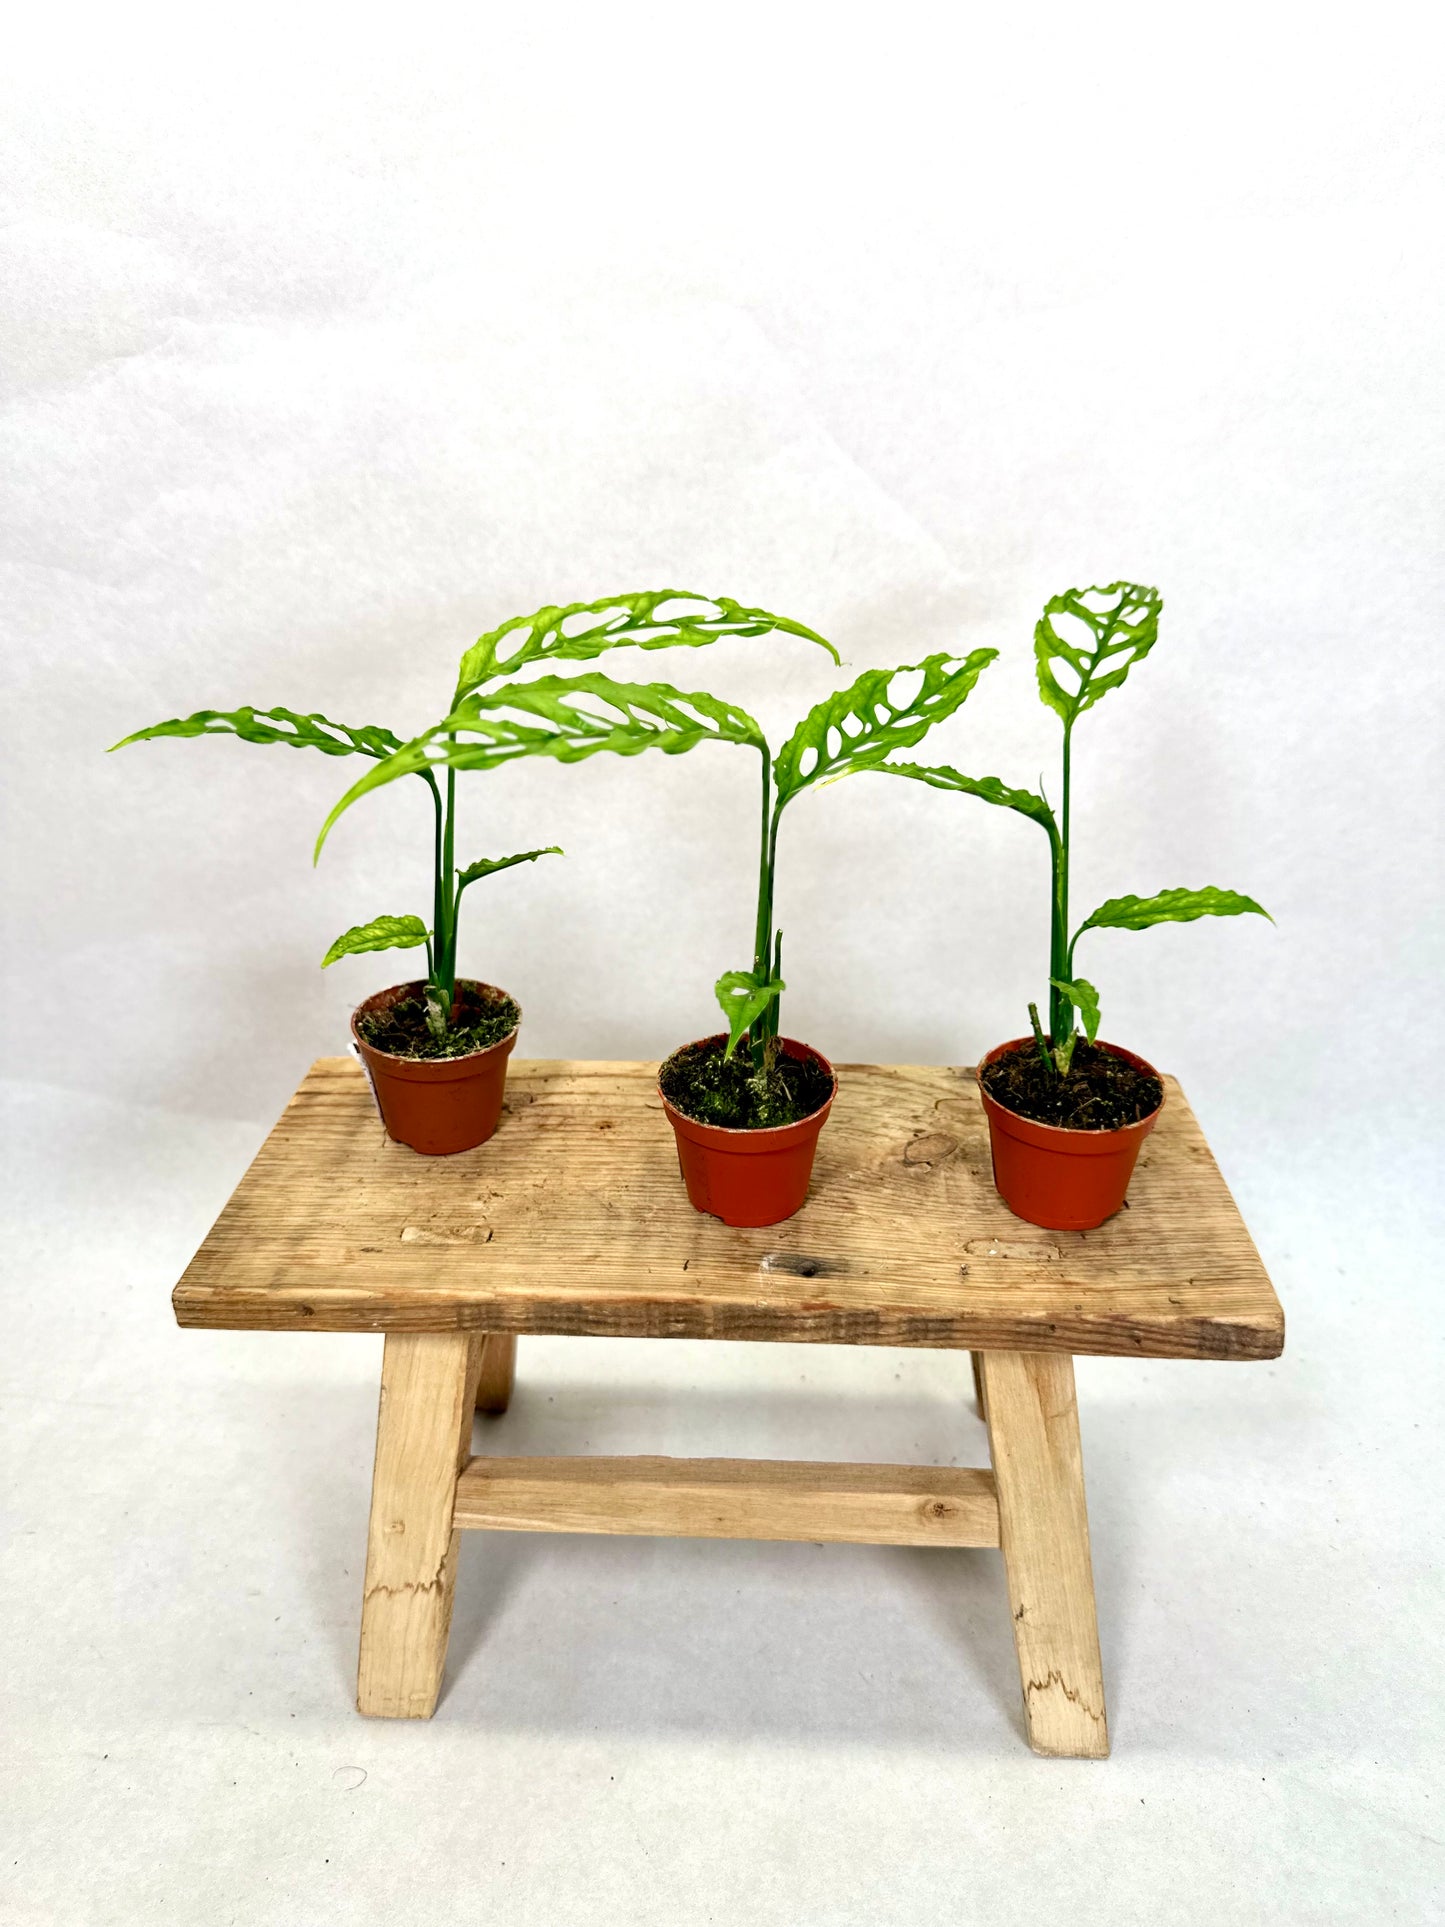 Monstera Obliqua Peru - Baby plant